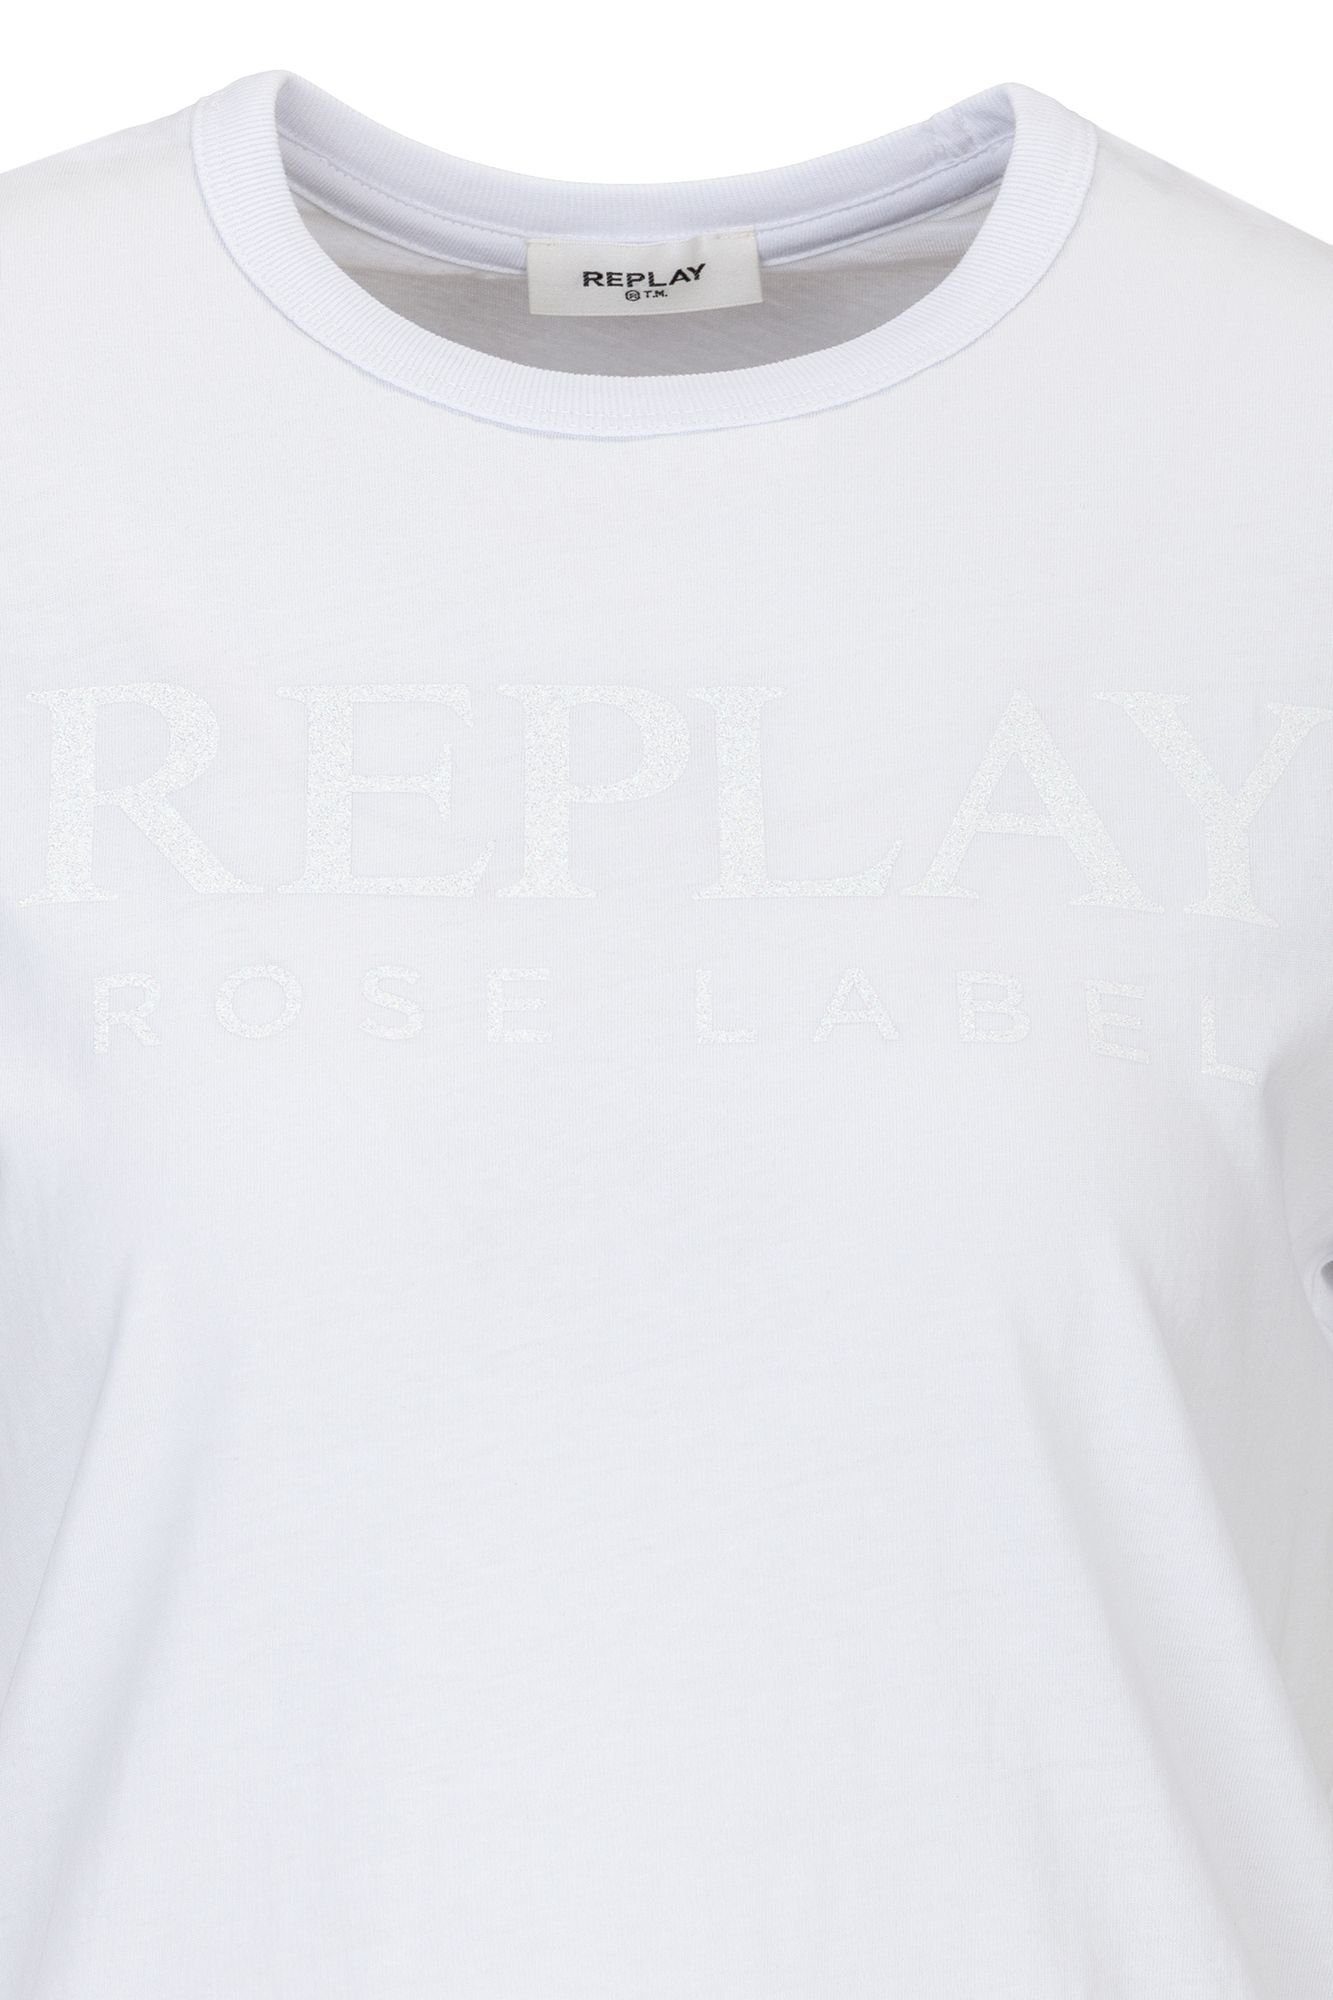 COTTON T-Shirt JERSEY Replay